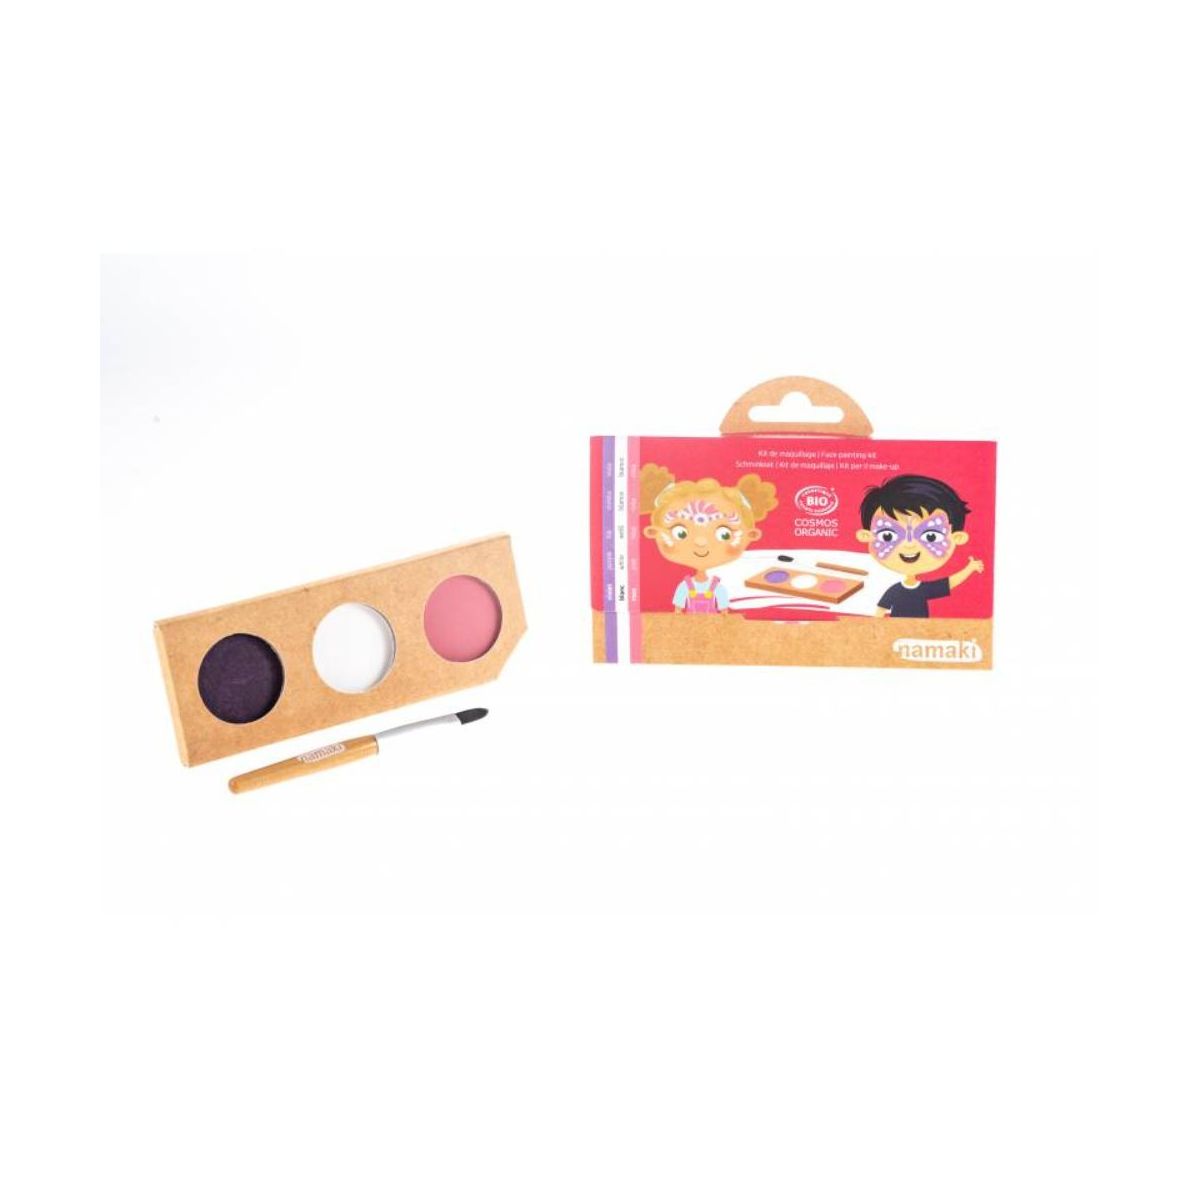 namaki Kit Maquillage Visage Princesse & Licorne, 1 kit - Boutique en ligne  Ecco Verde